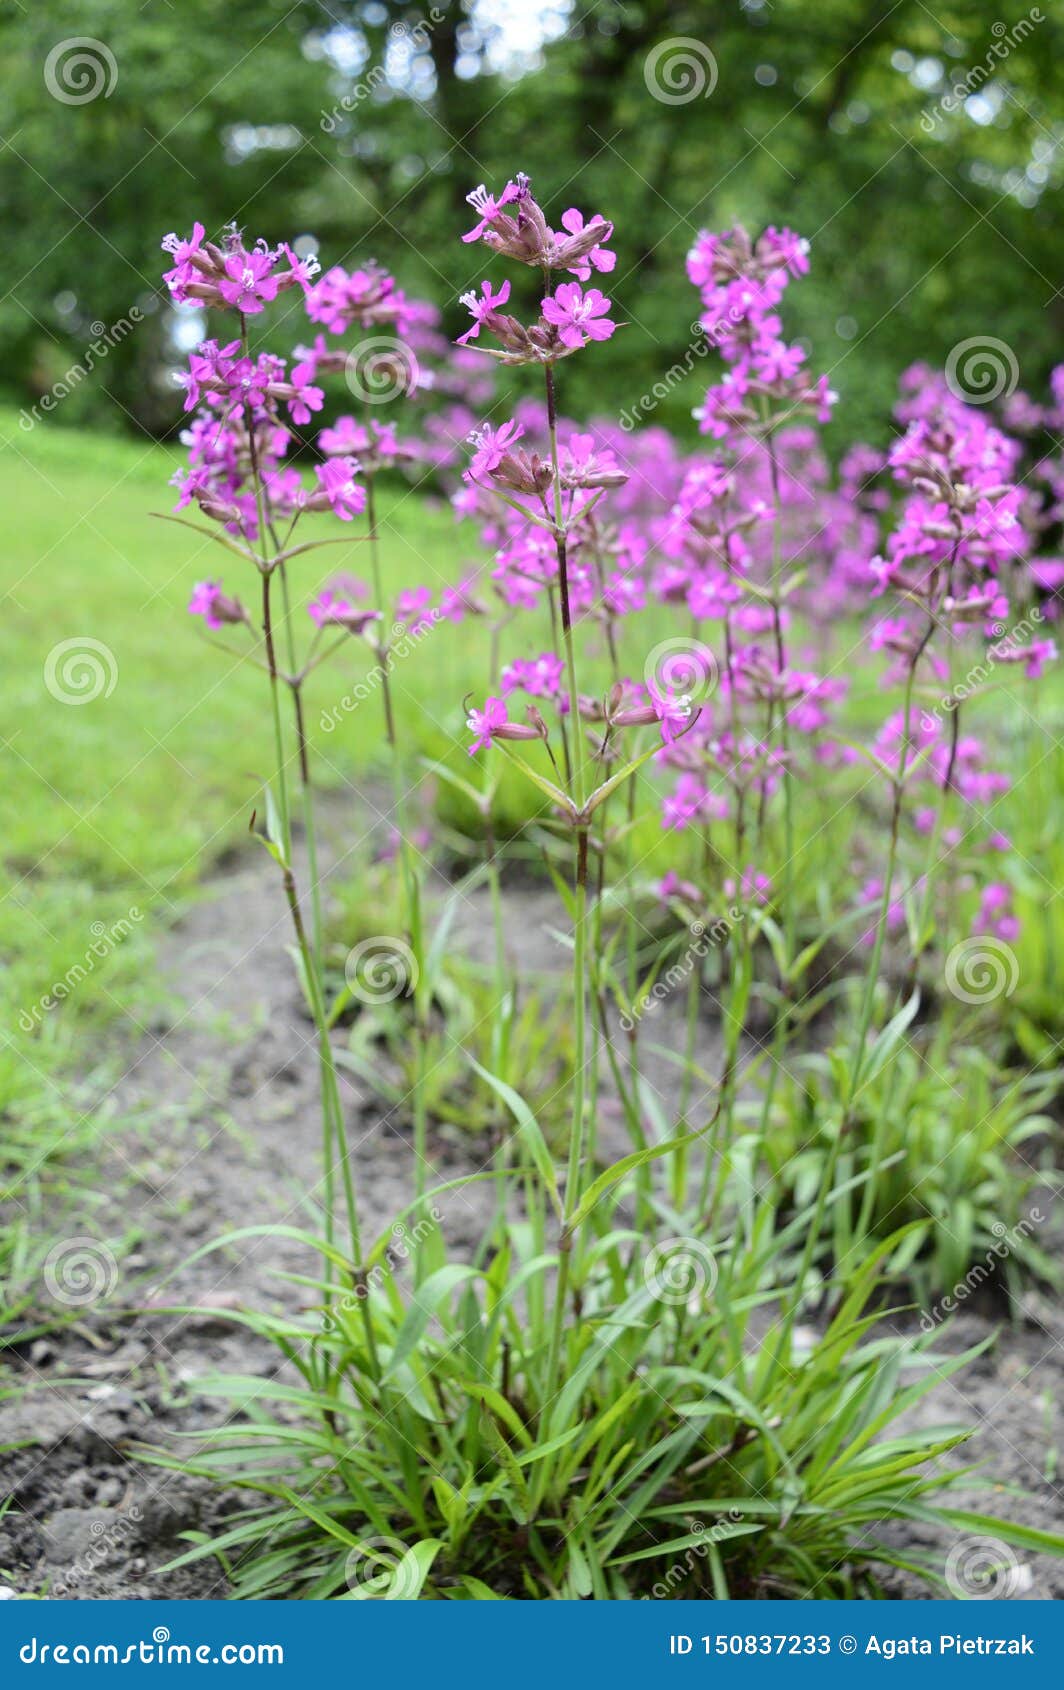 Semis de Silene - Page 3 Silene-yunnanensis-pink-flowers-closeup-silene-yunnanensis-called-as-campion-smal-beuriful-purple-flowers-blurred-150837233